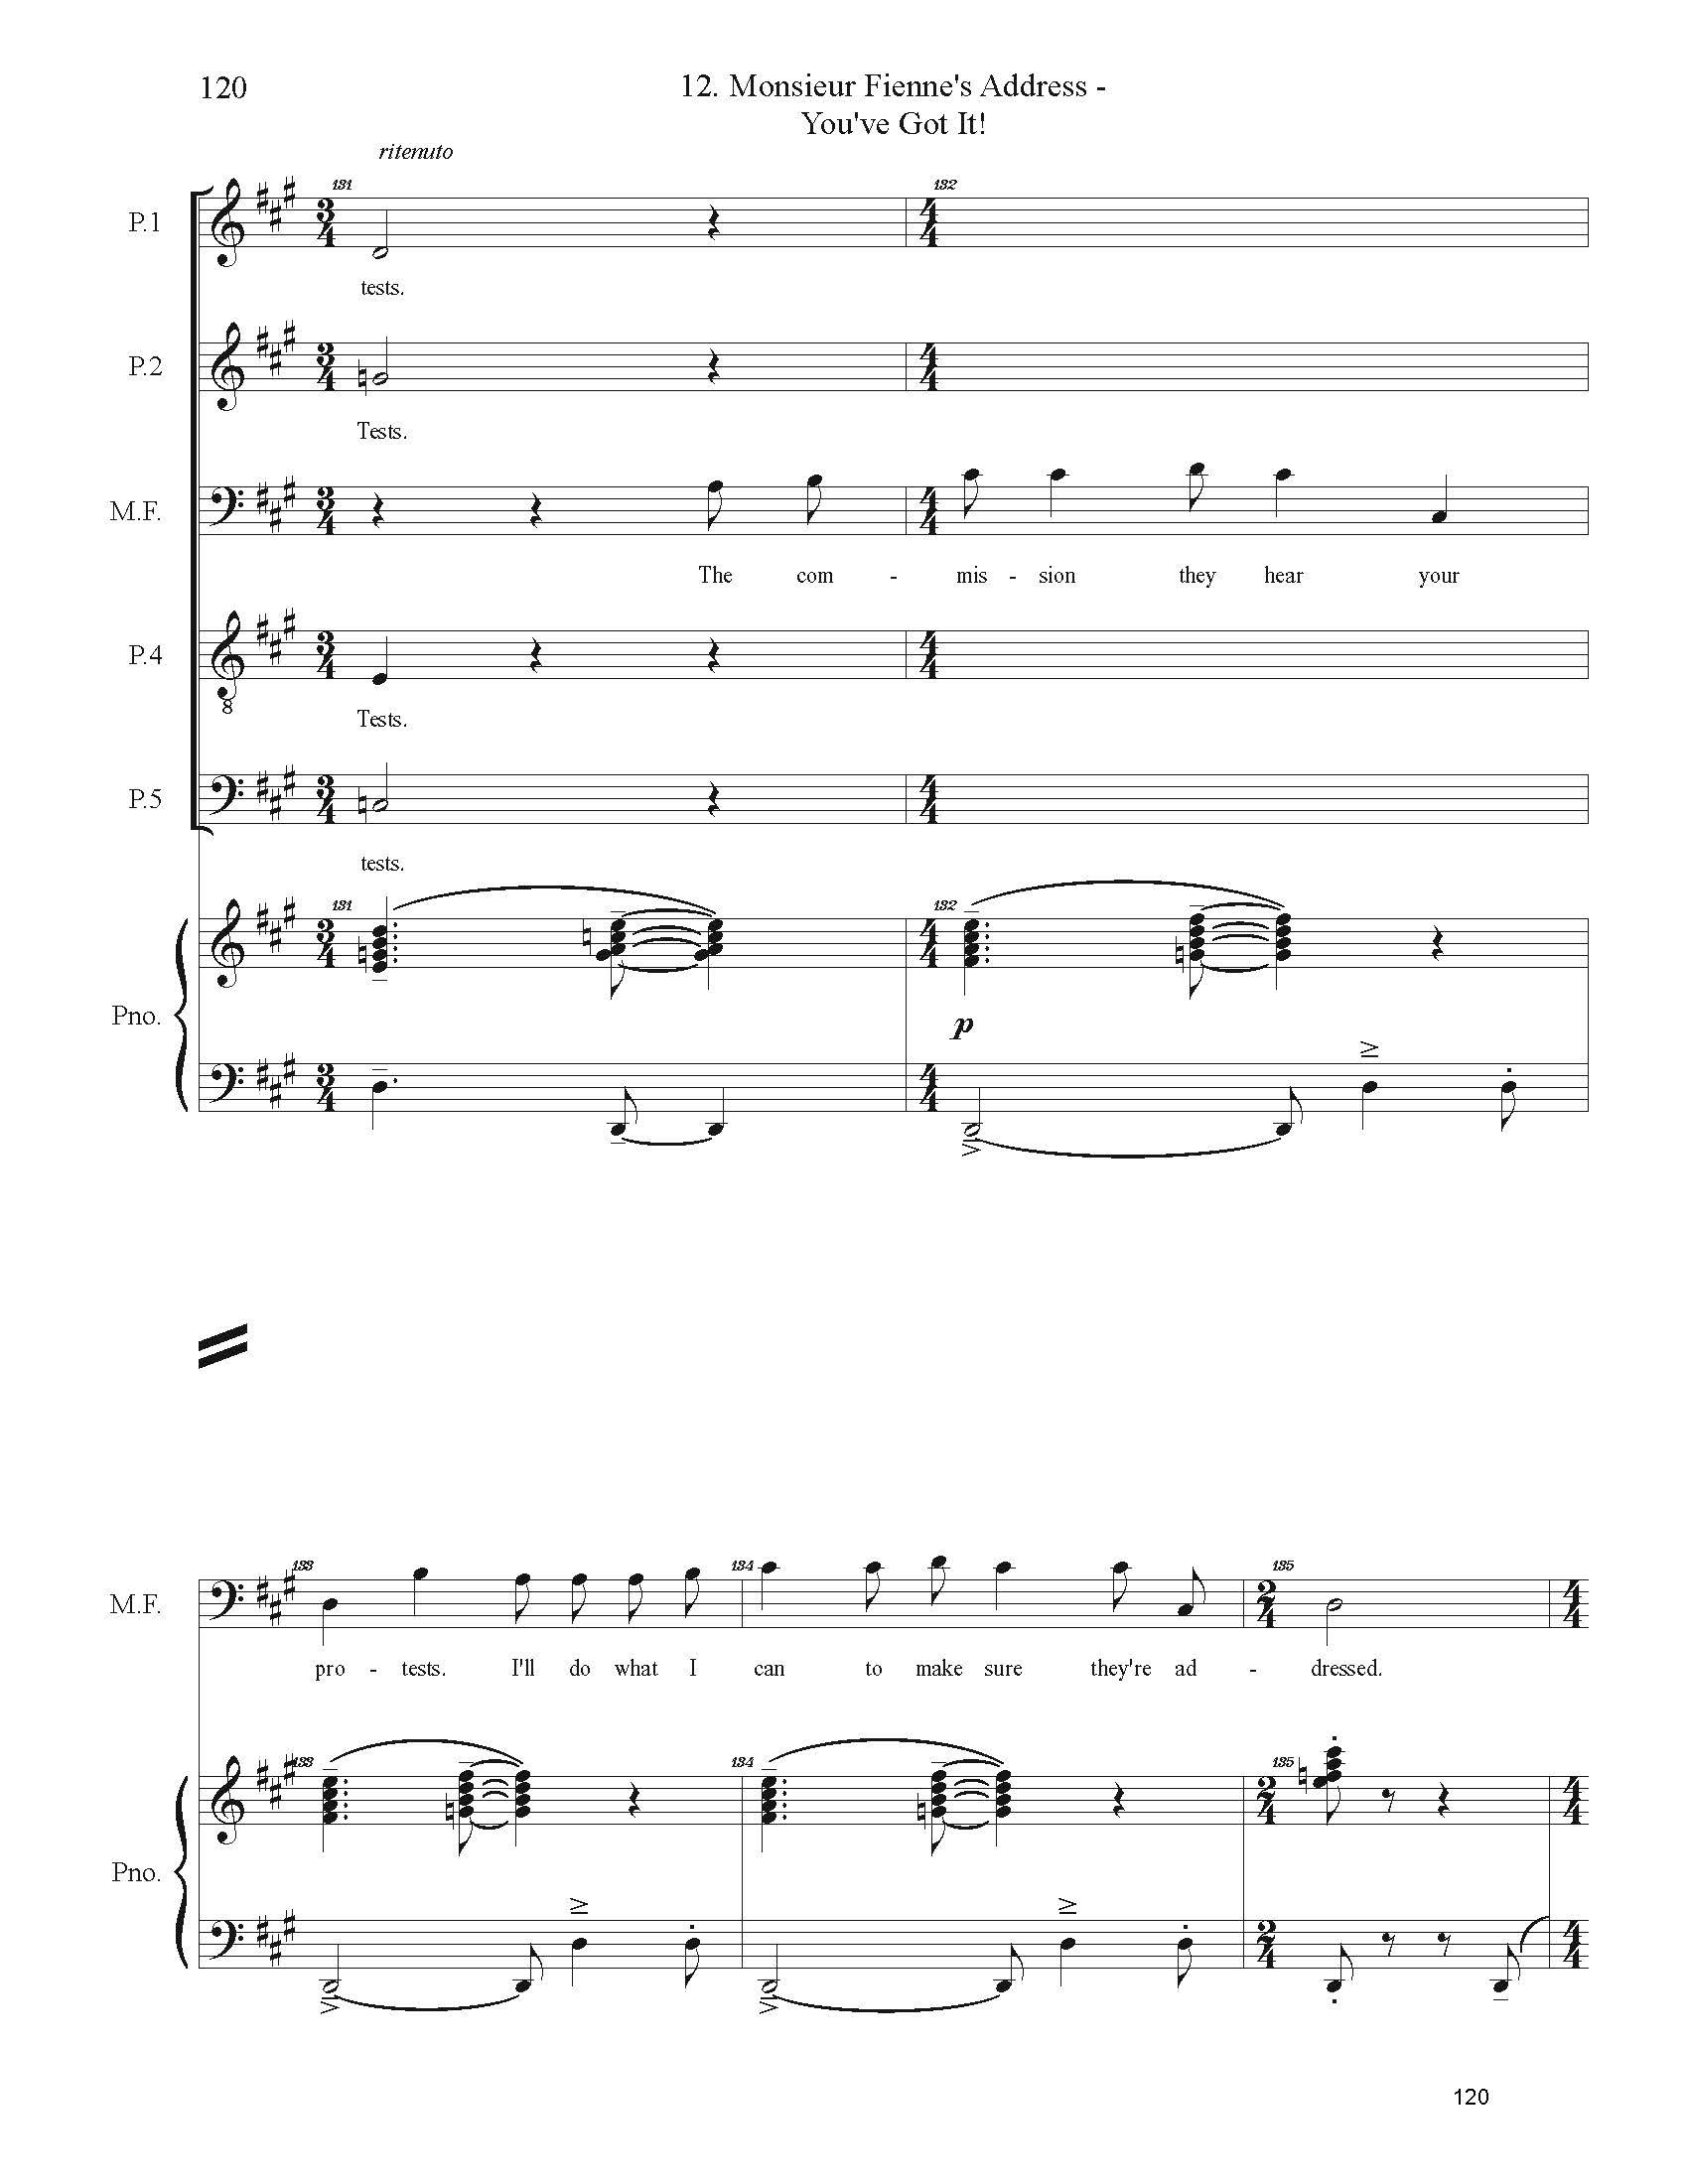 FULL PIANO VOCAL SCORE DRAFT 1 - Score_Page_120.jpg